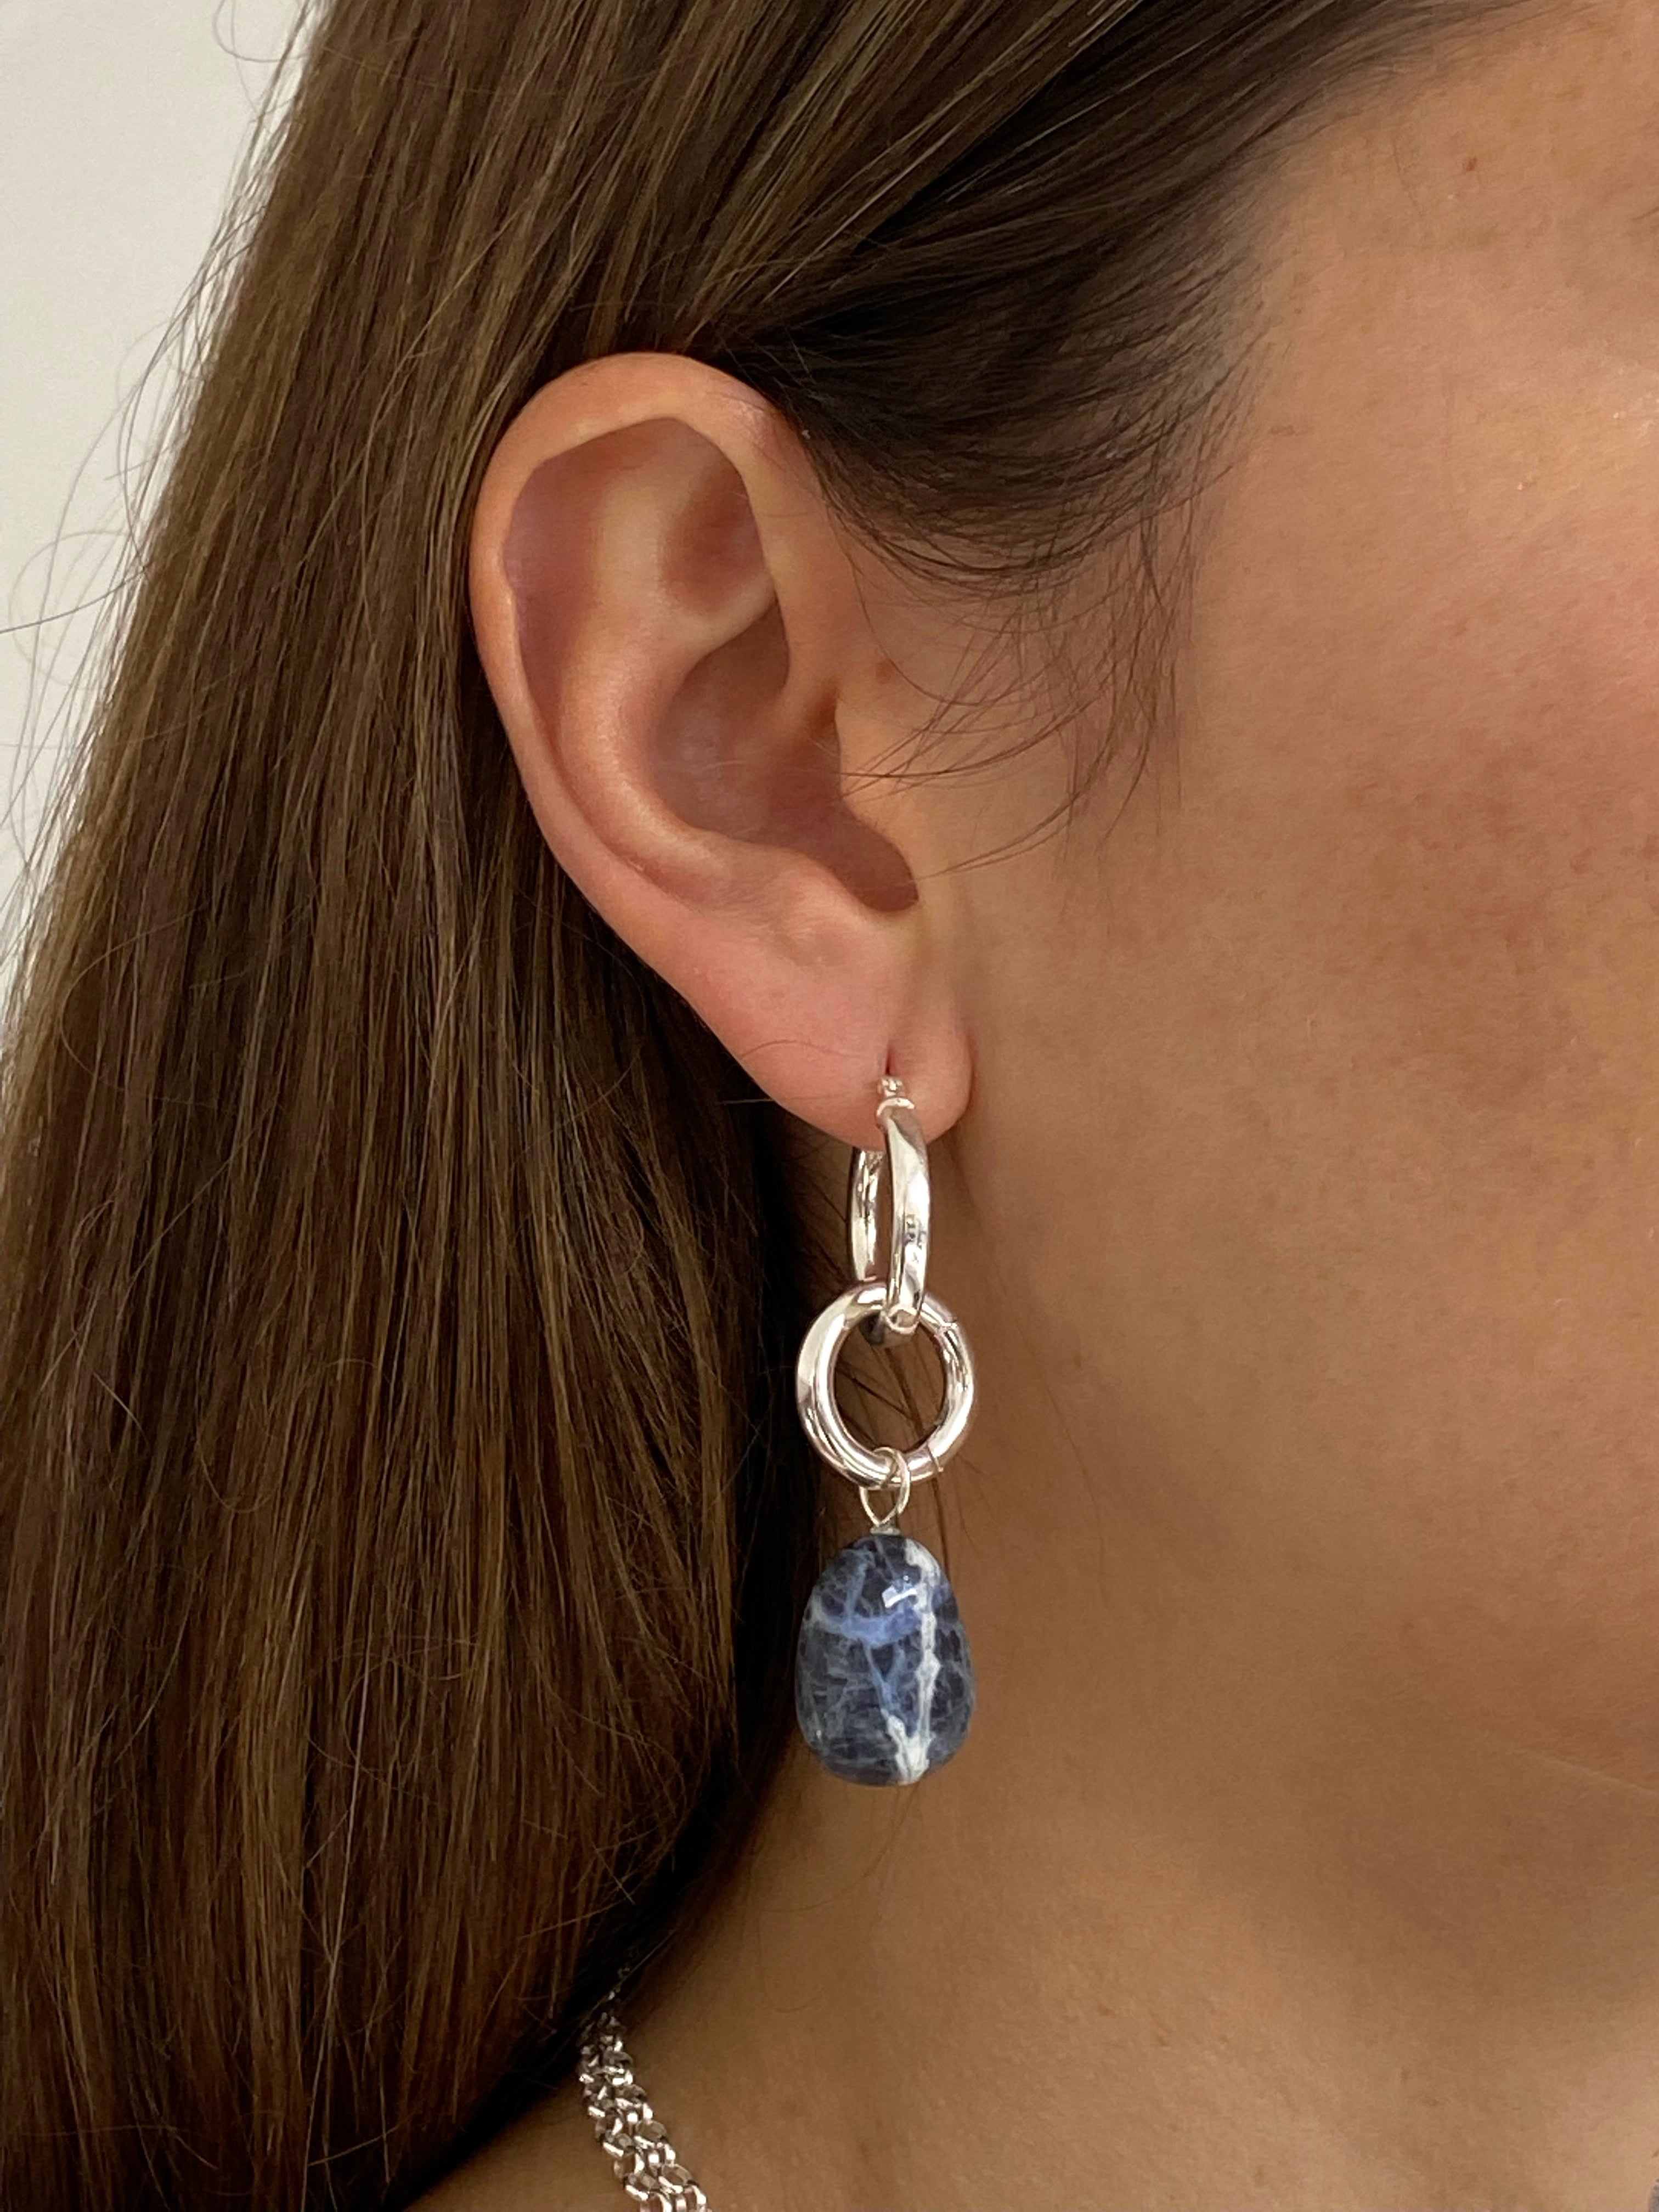 llayers-minimal-Silver-sodalite-stone-hoops-earrings-jewelry-Made-in-Brooklyn-New-York